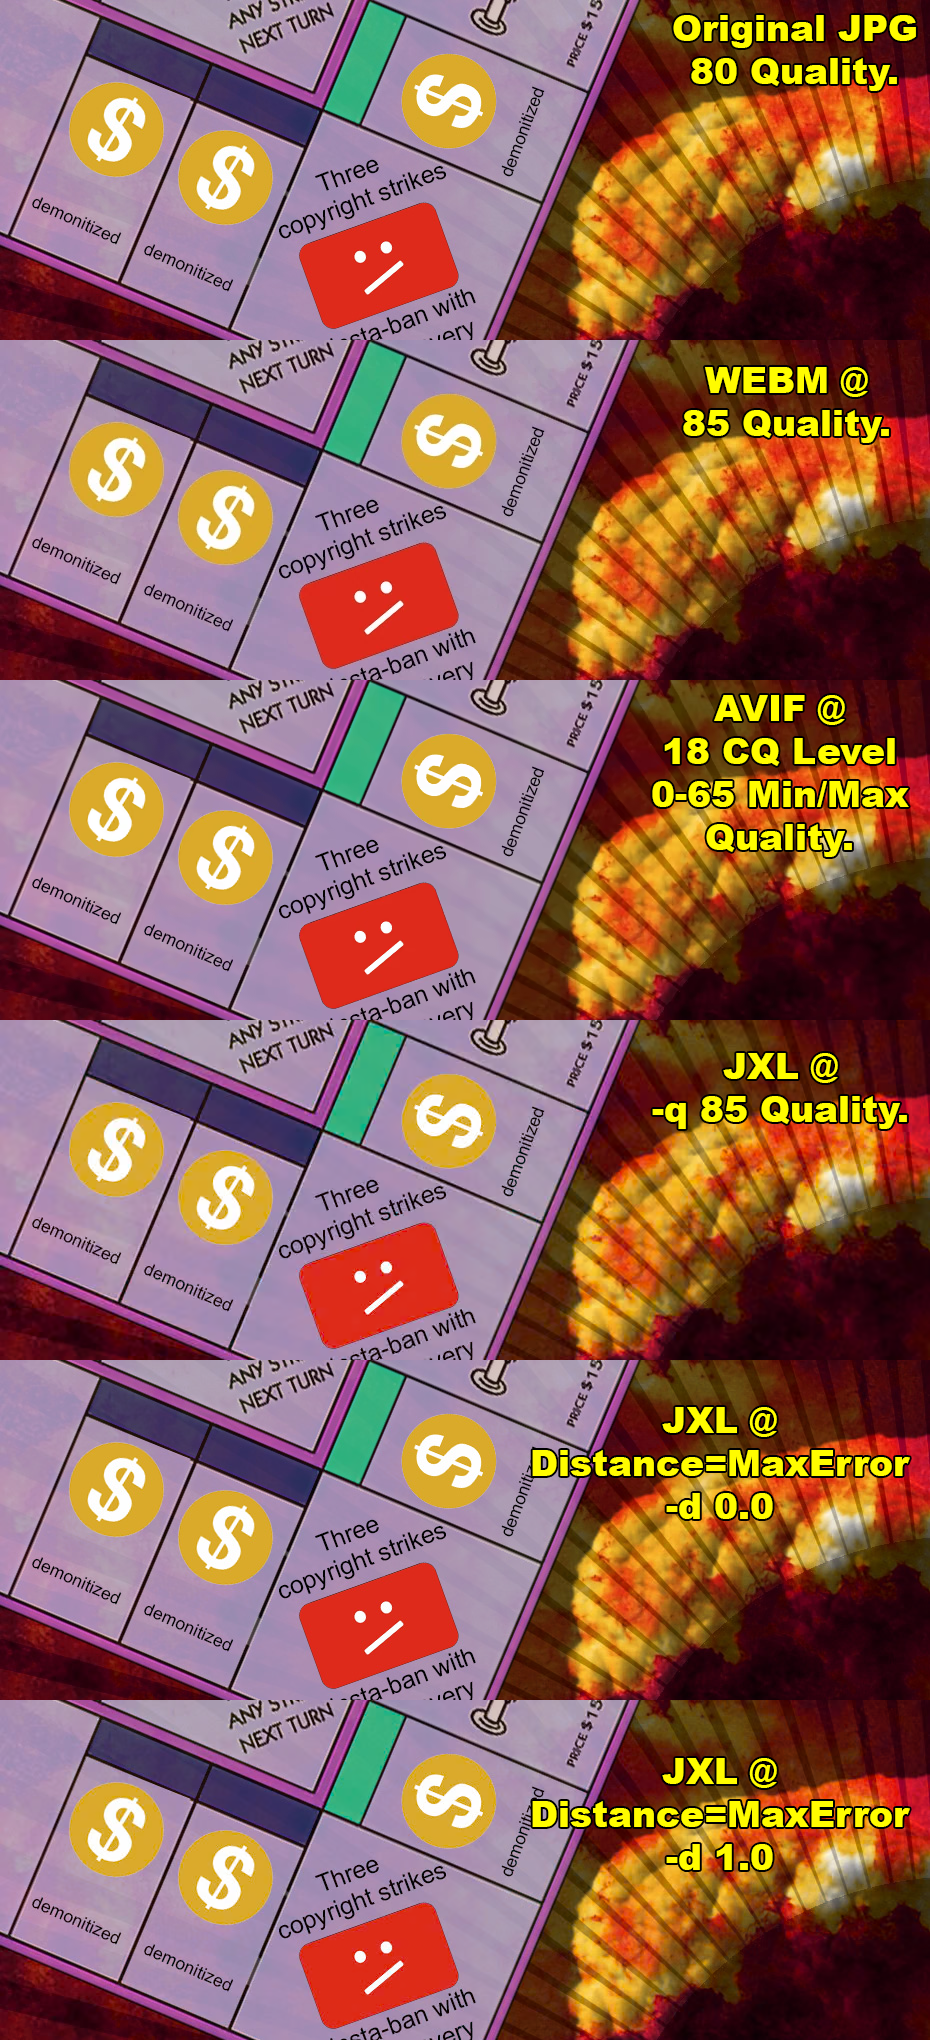 Image Comparison between AVIF, JXL, Original JPG, WebP